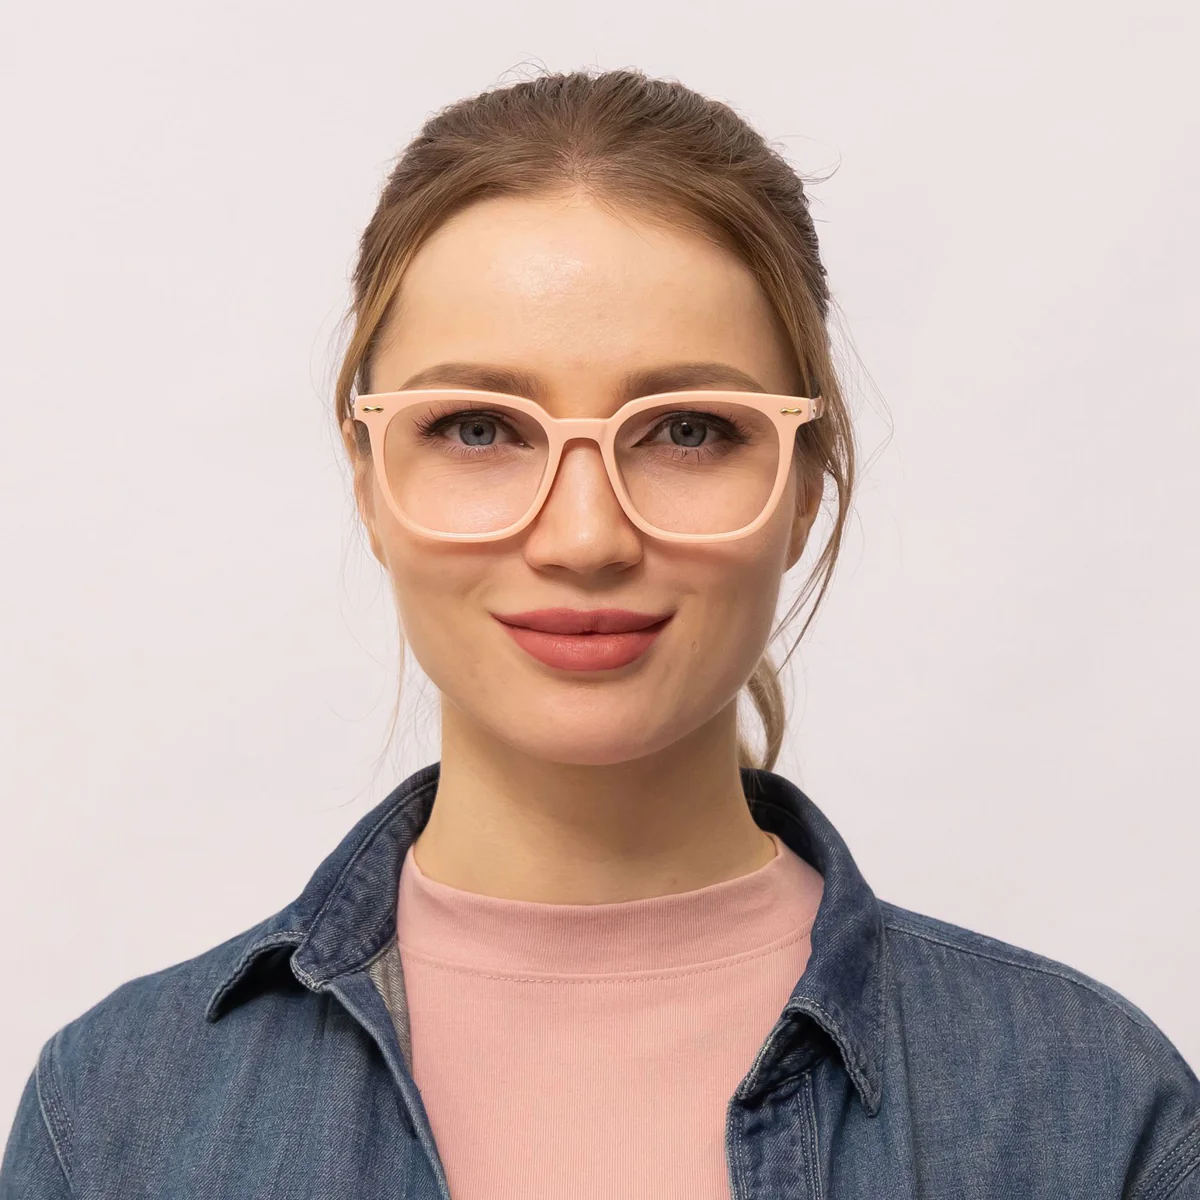 woman wears low bridge glasses that makes her eyes appear bigger